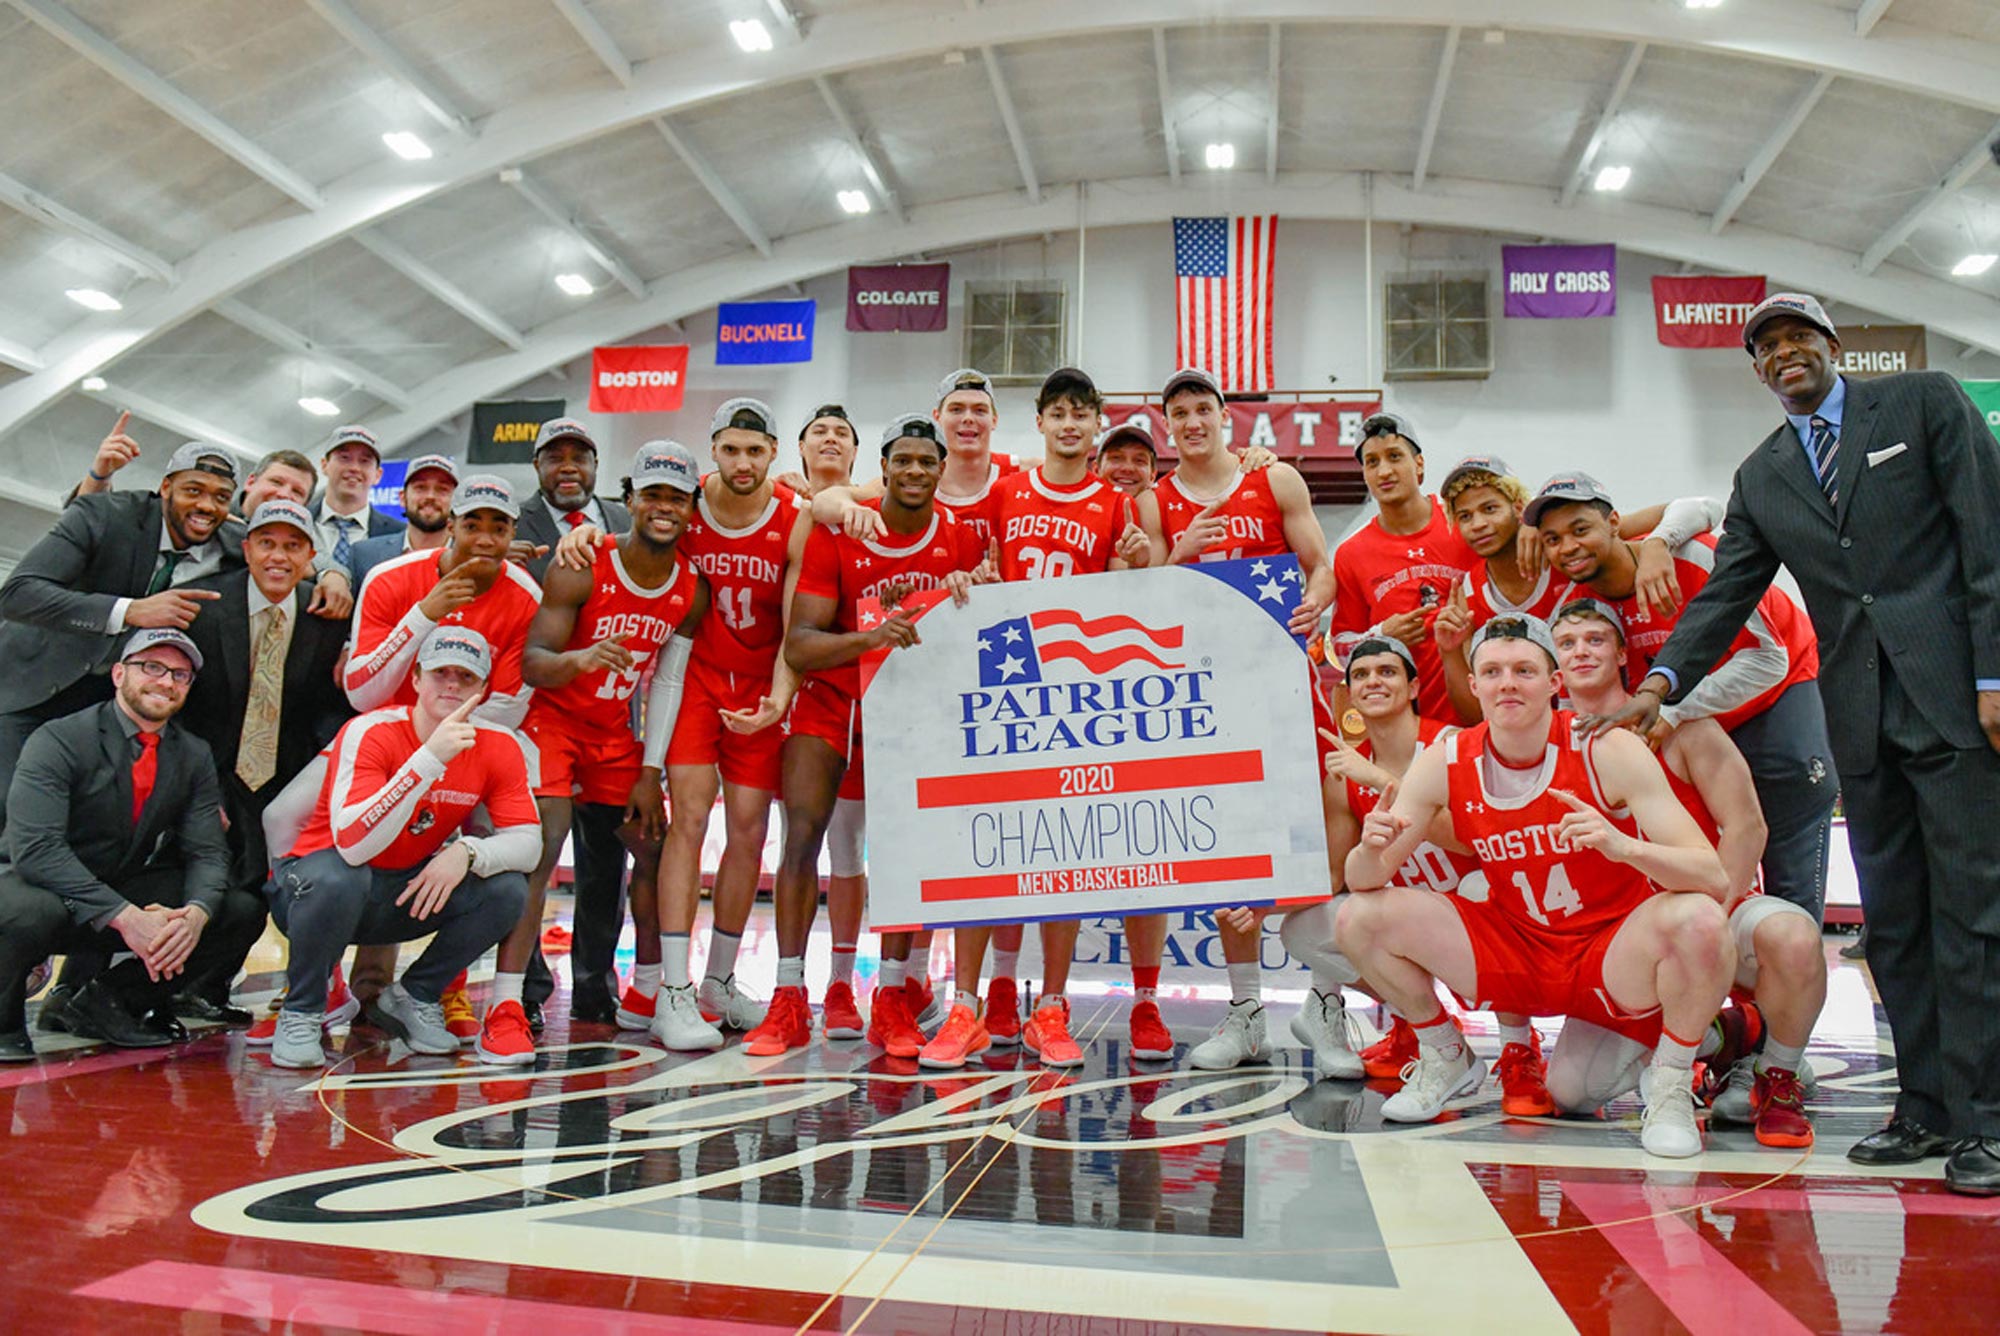 A photo of the BU Men's basketball team celebrating their Patriot League title